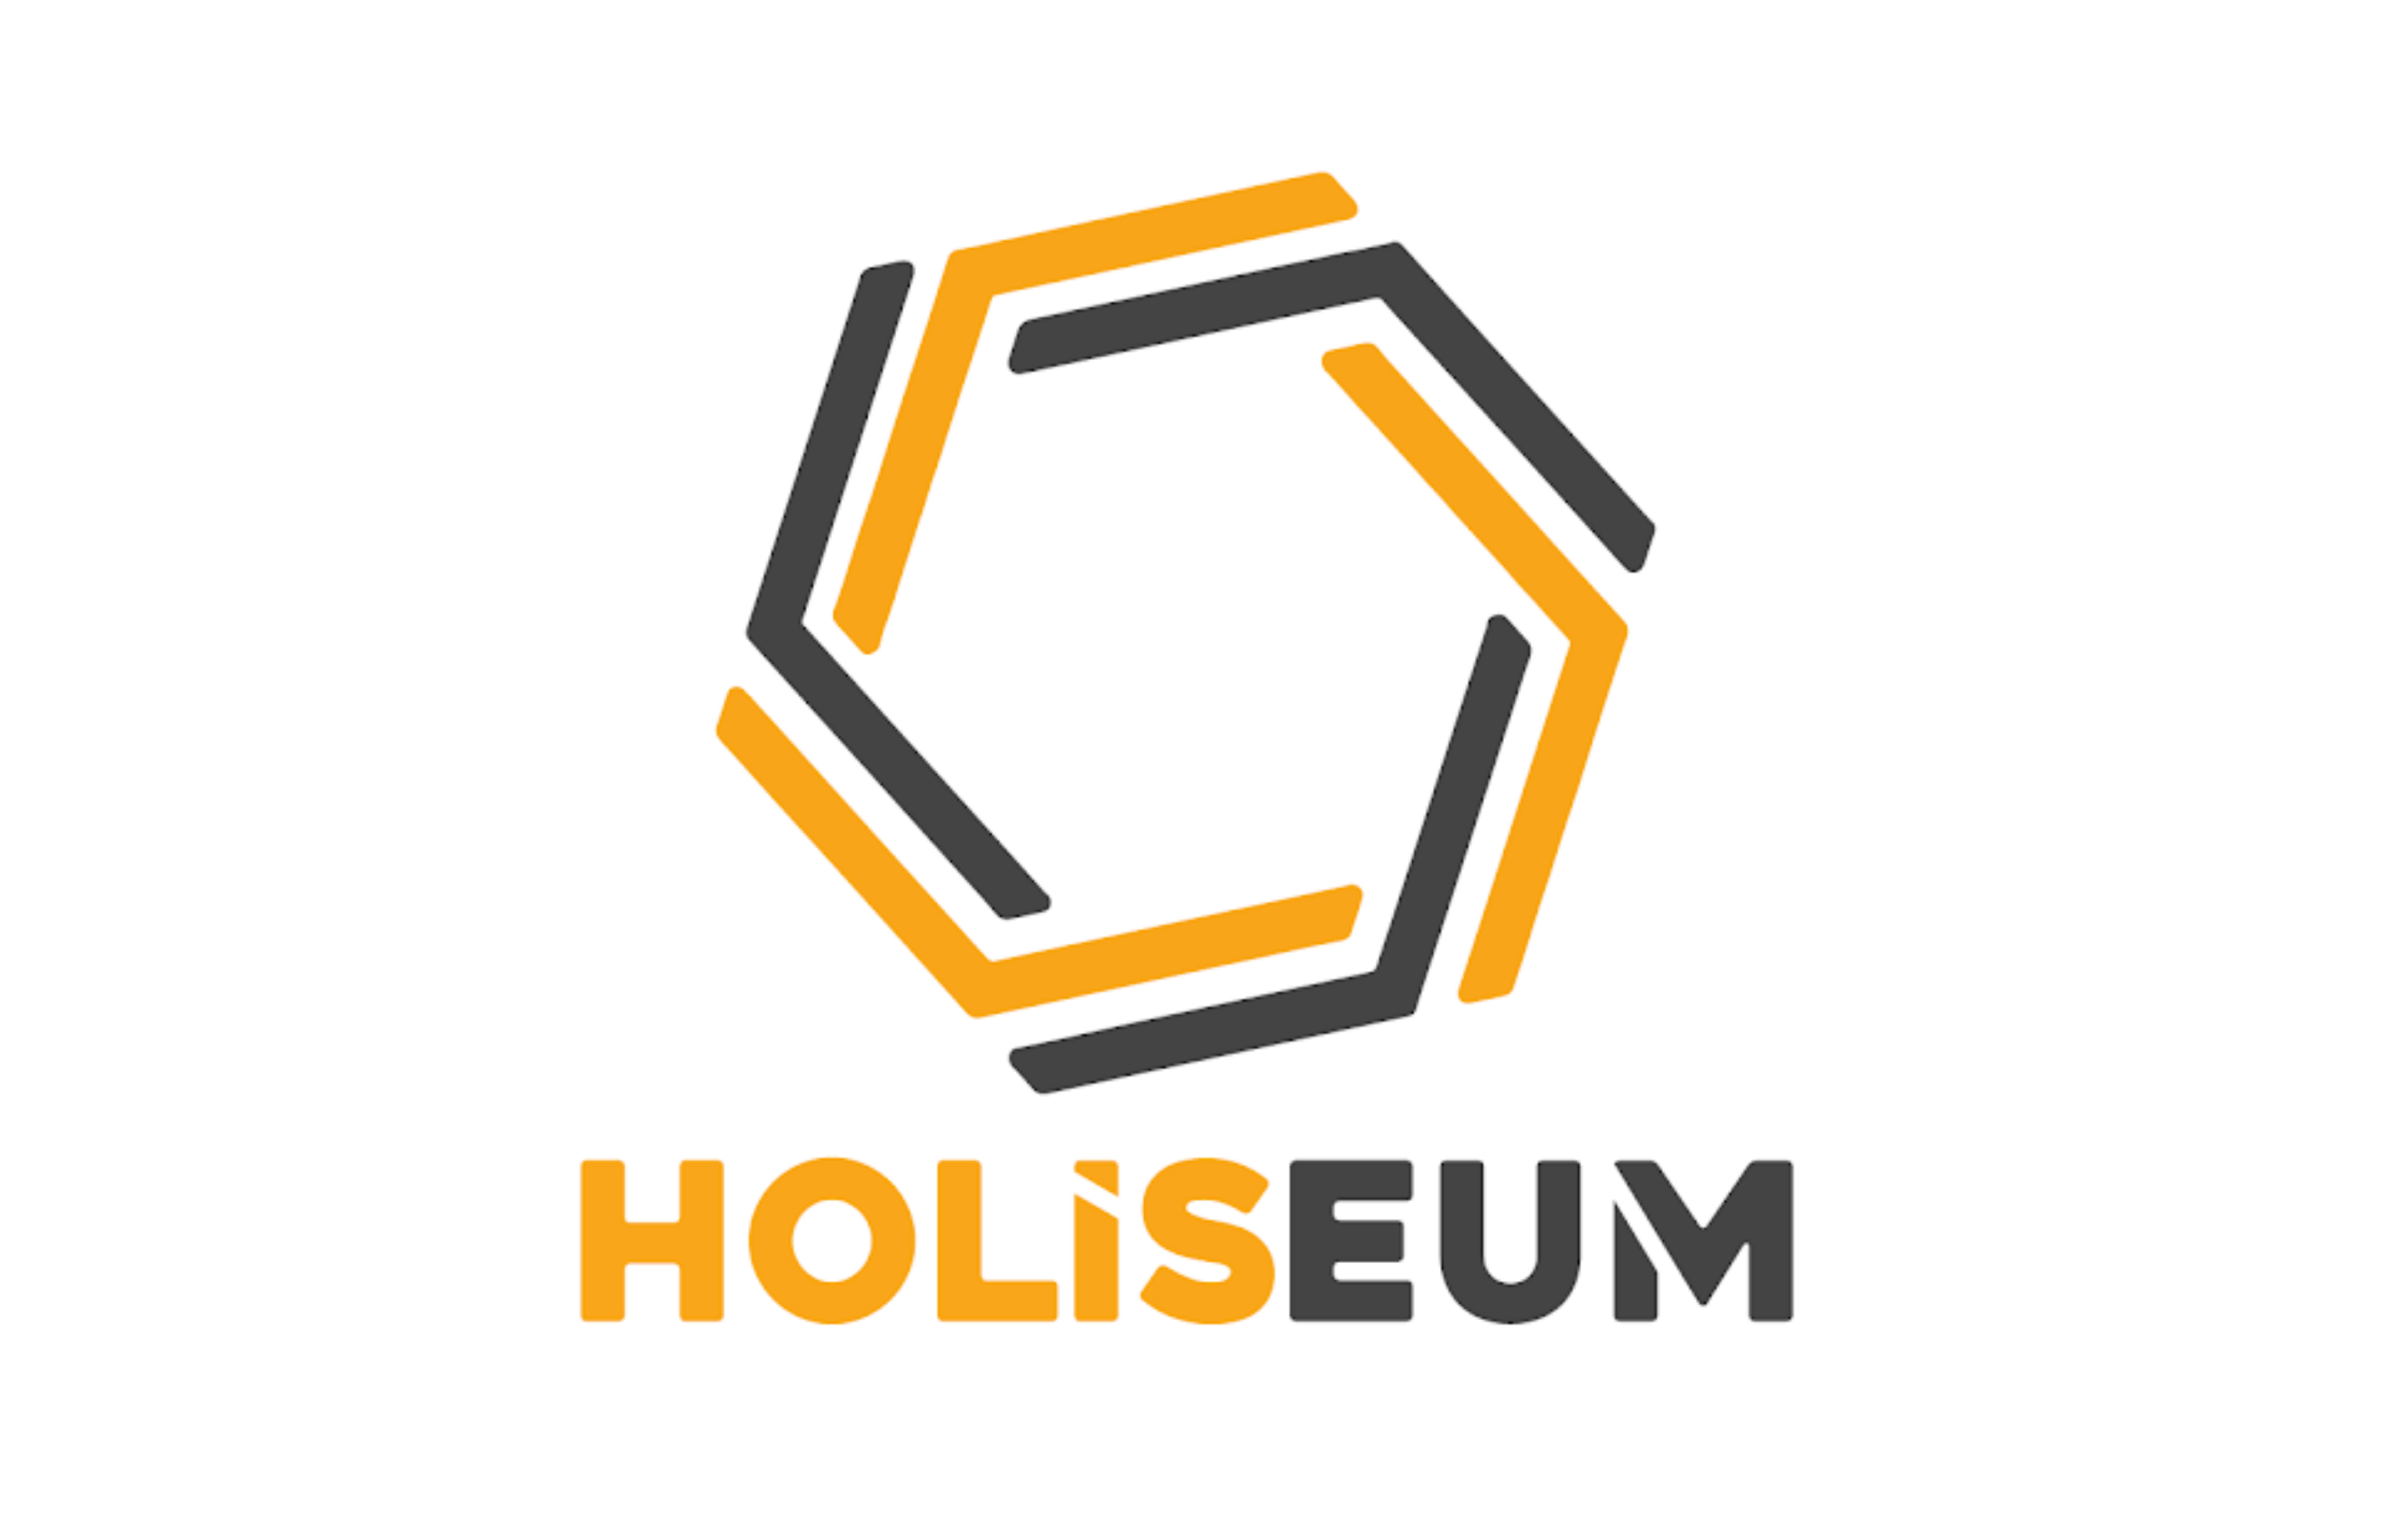 Holiseum